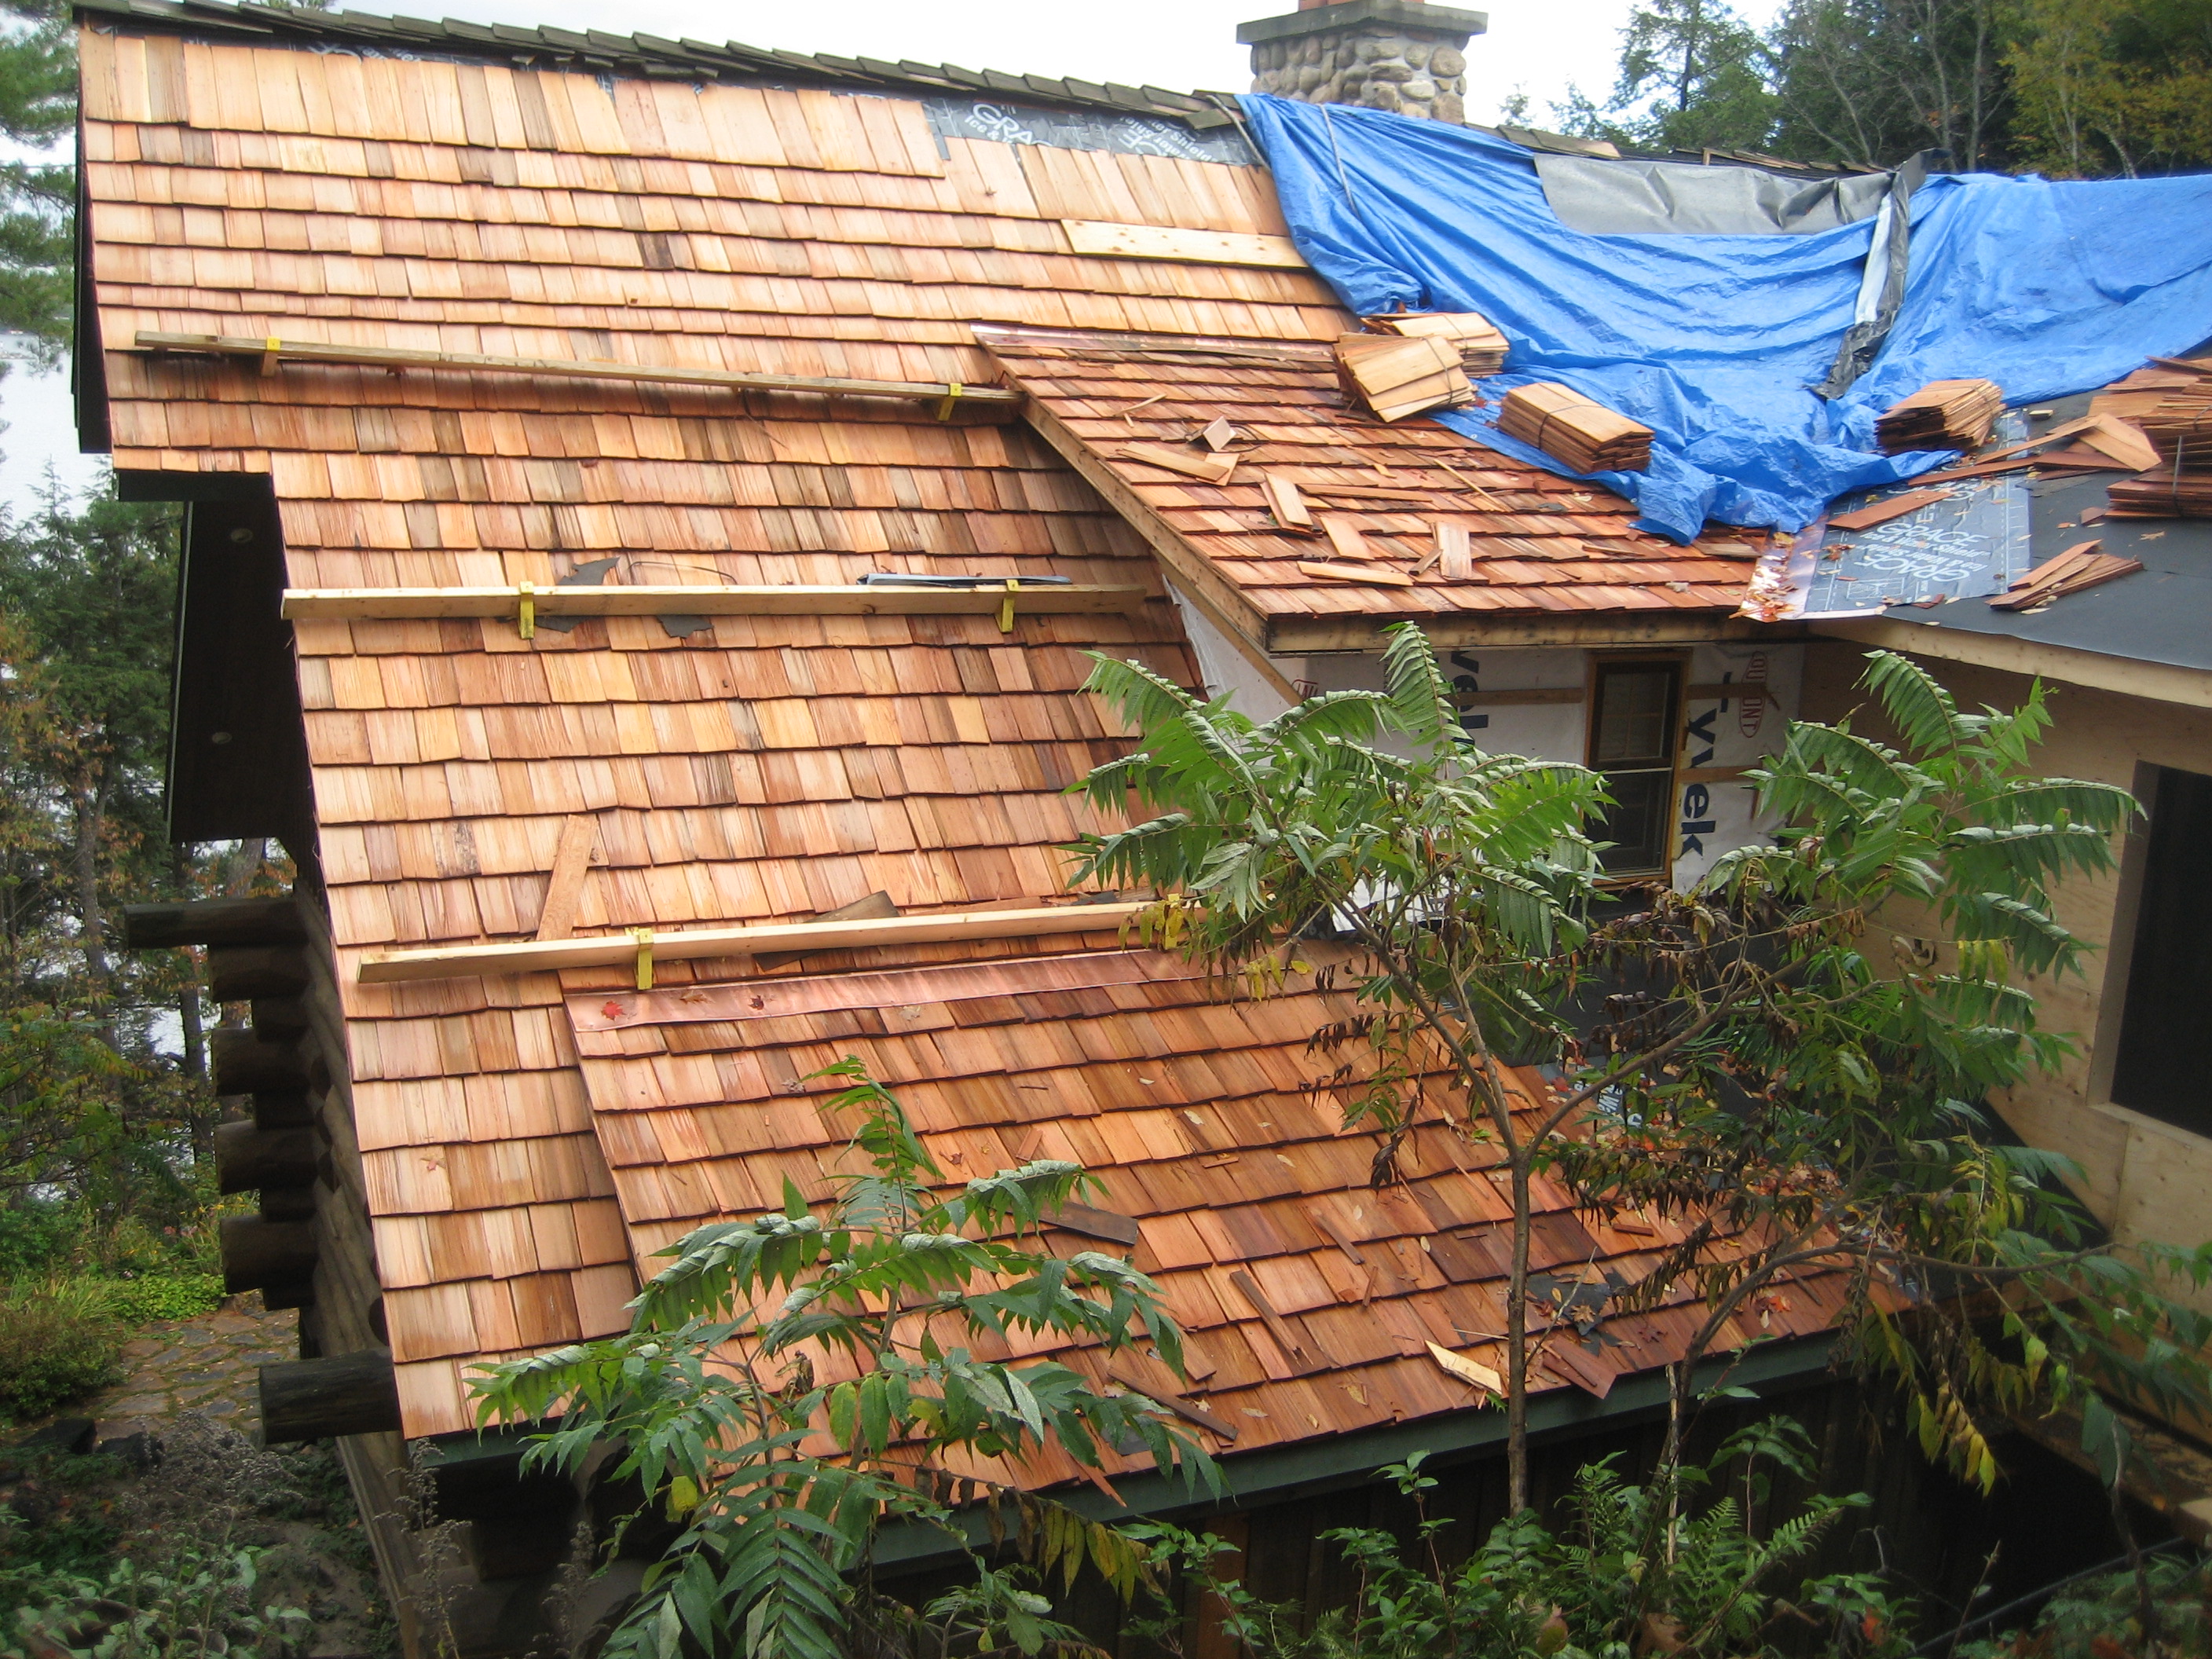 New Muskoka Roof